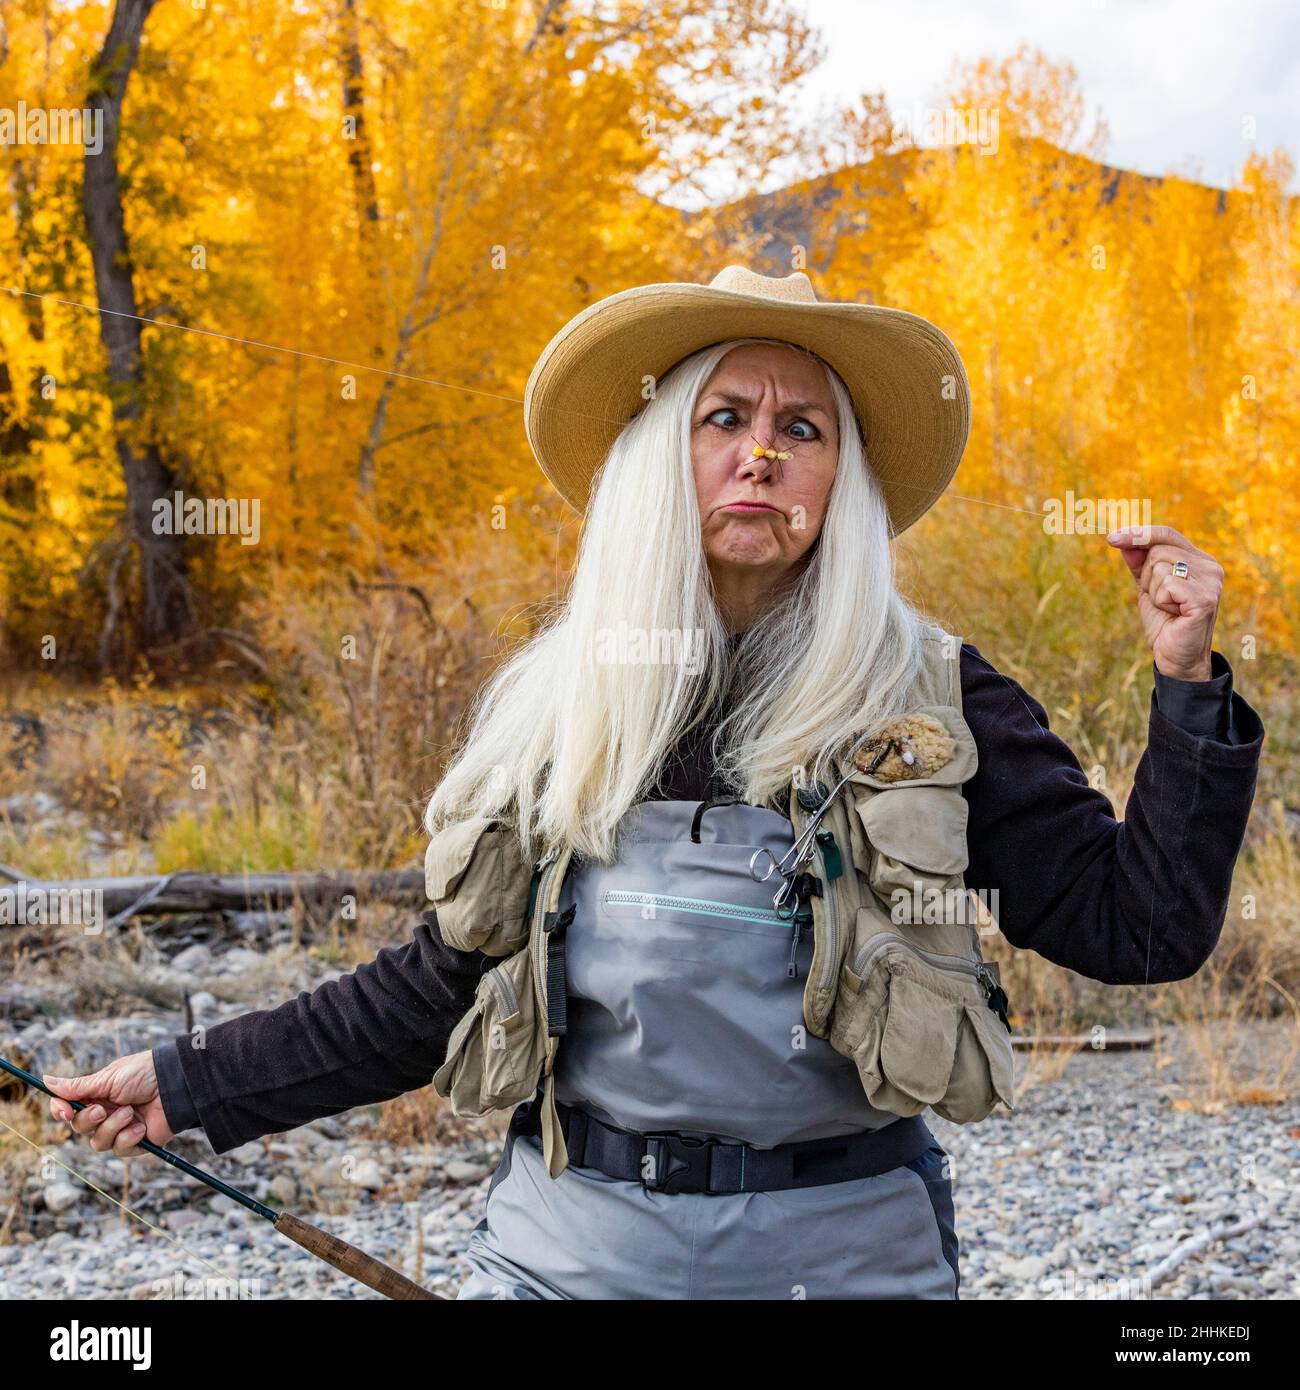 USA, Idaho, Bellevue, Senior woman holding fishing rod and making faces Stock Photo